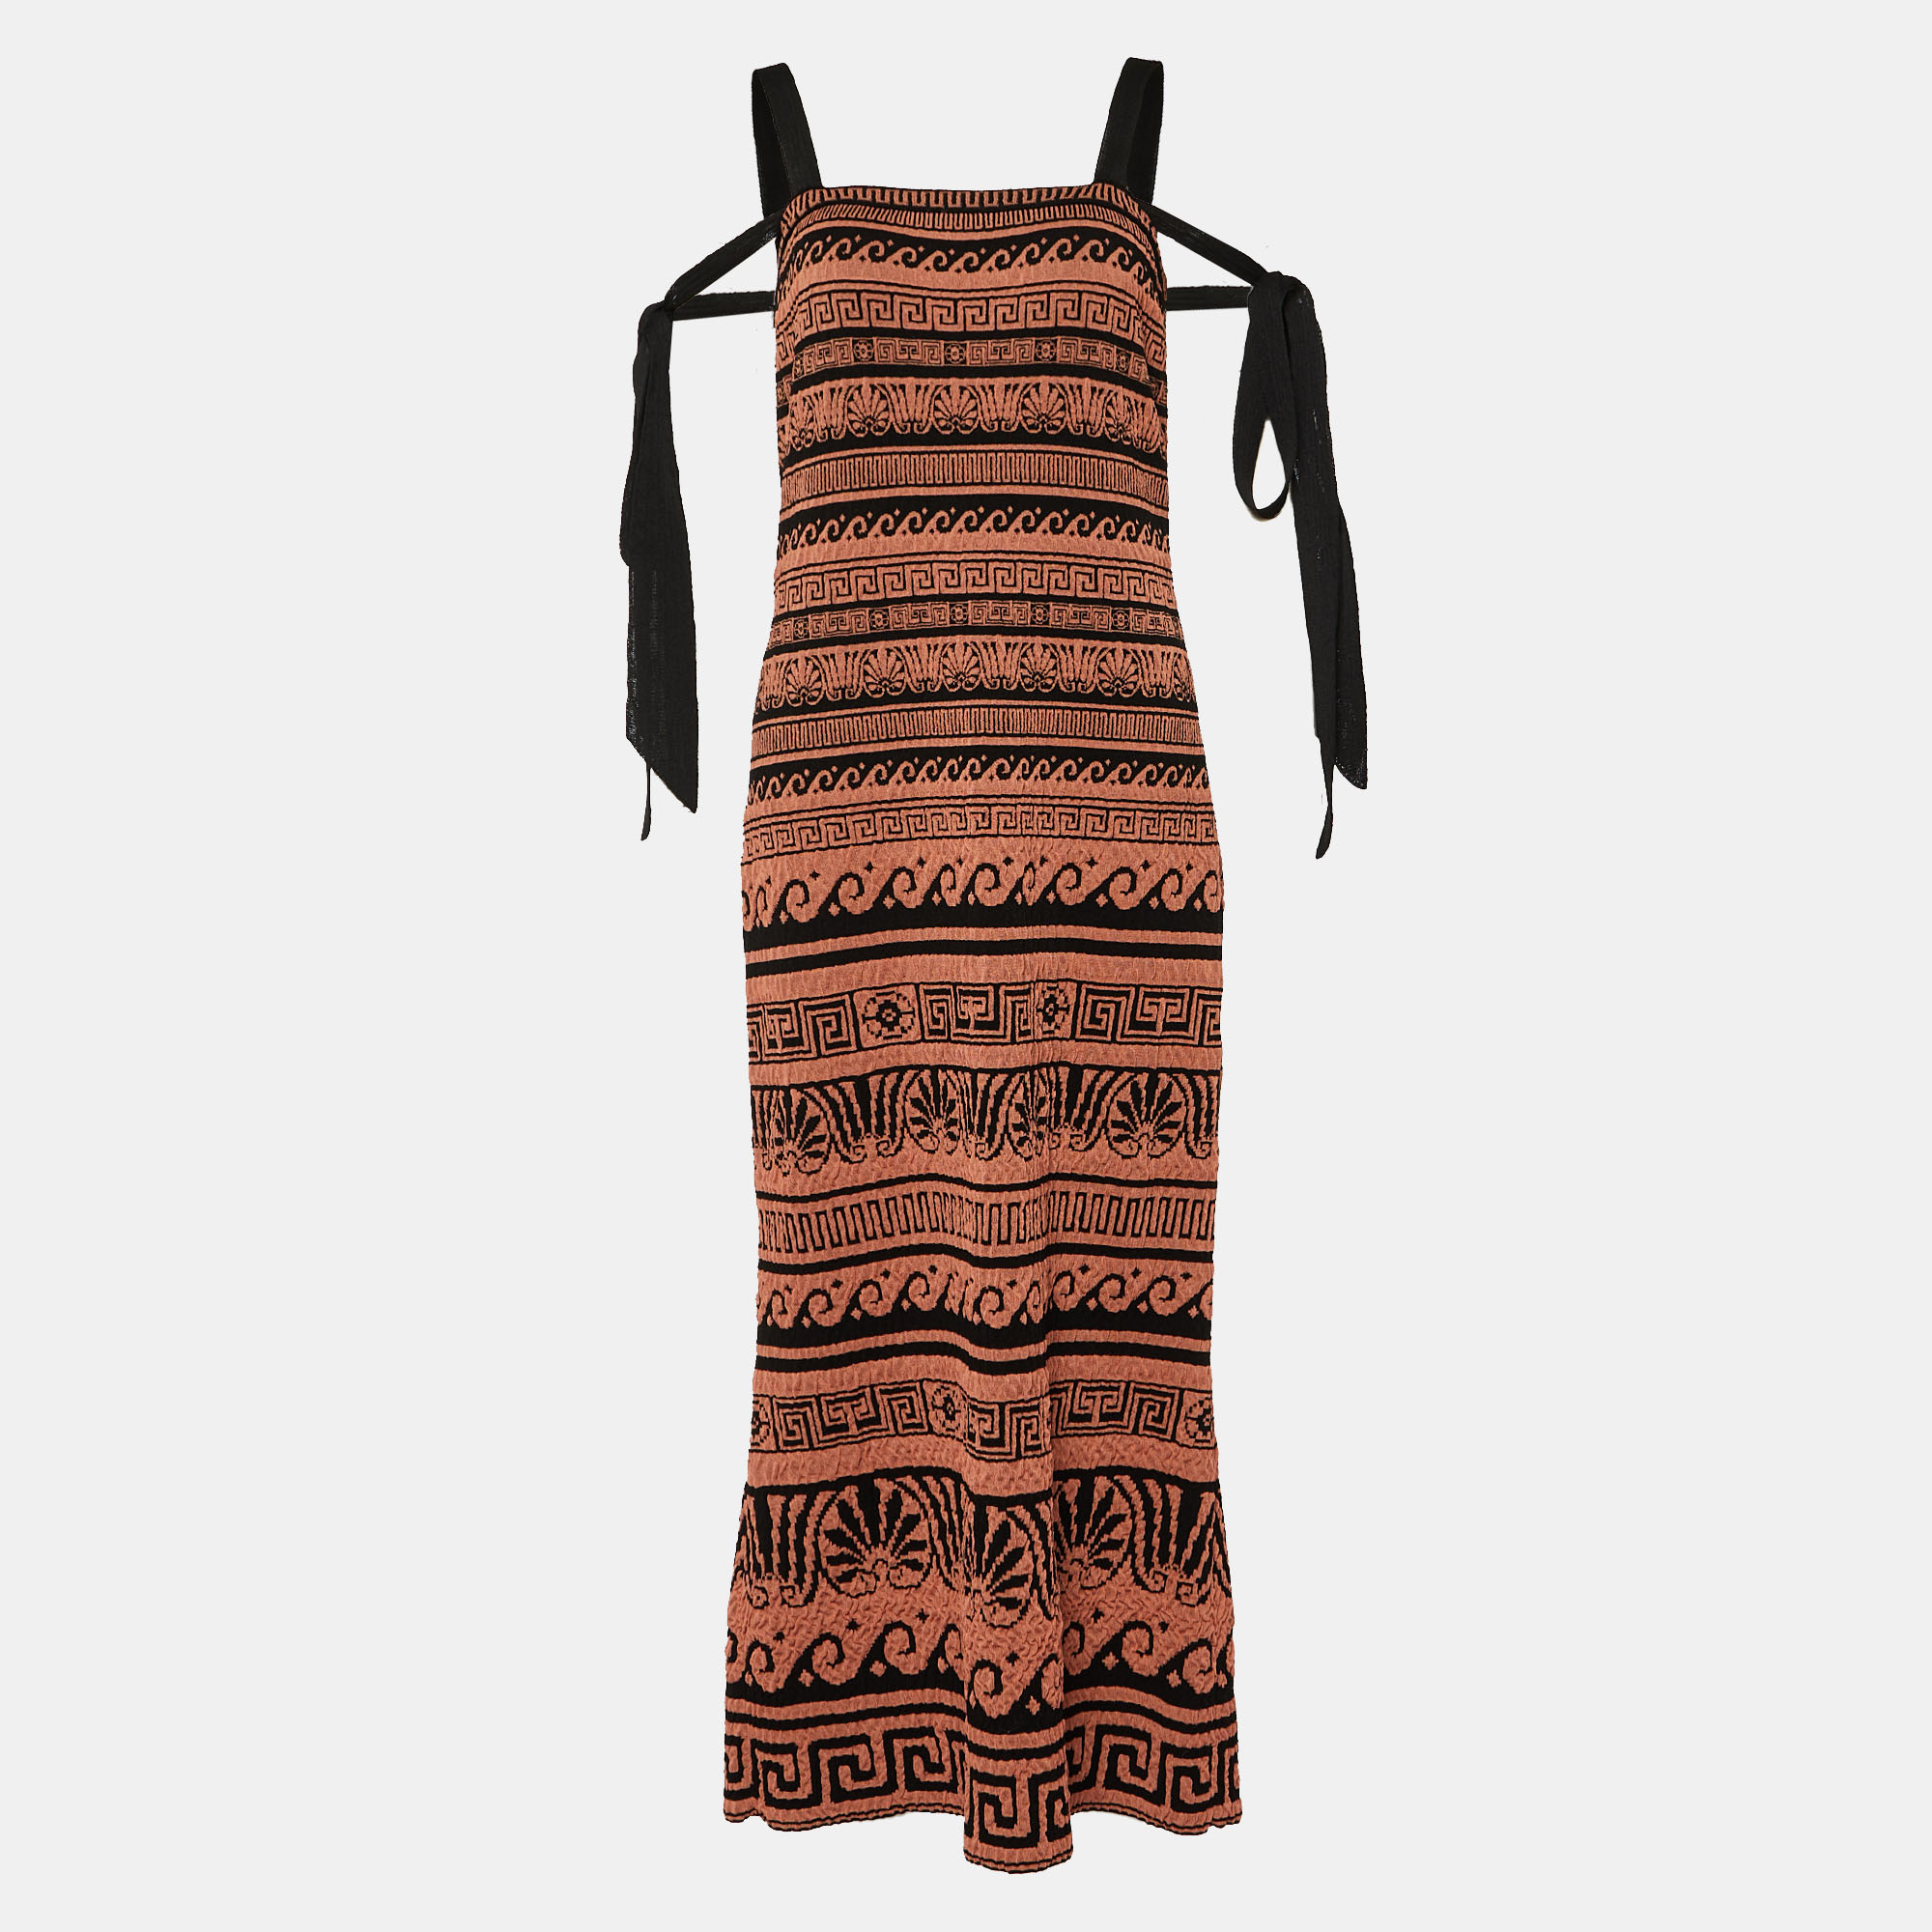 Chanel Terracotta & Black Knit Antique Grecian Intarsia Knit Maxi Dress M